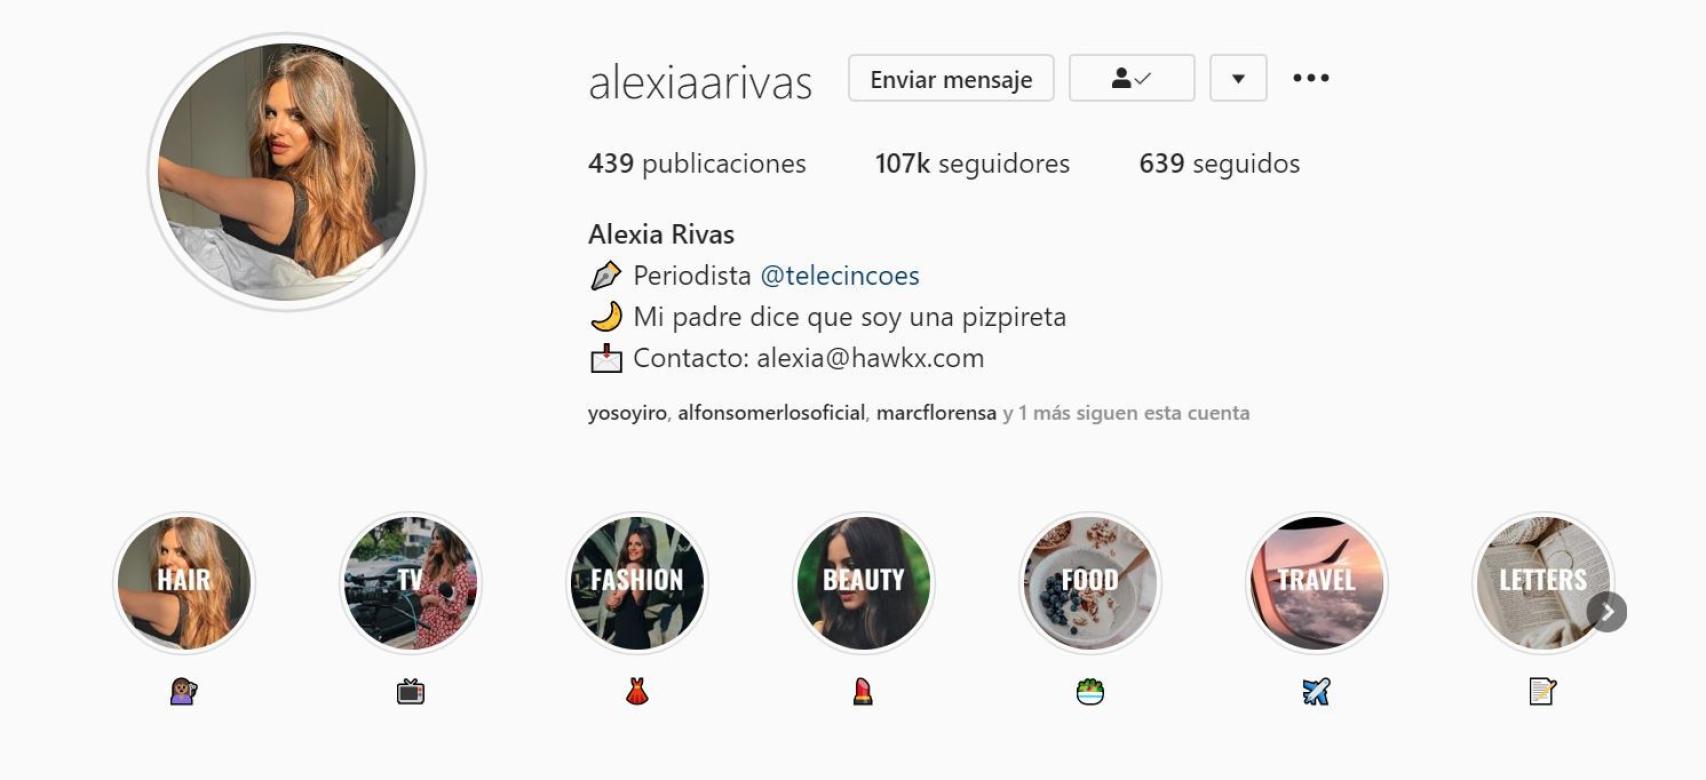 Captura del perfil de Instagram de Alexia Rivas, que ha quintuplicado sus seguidores.